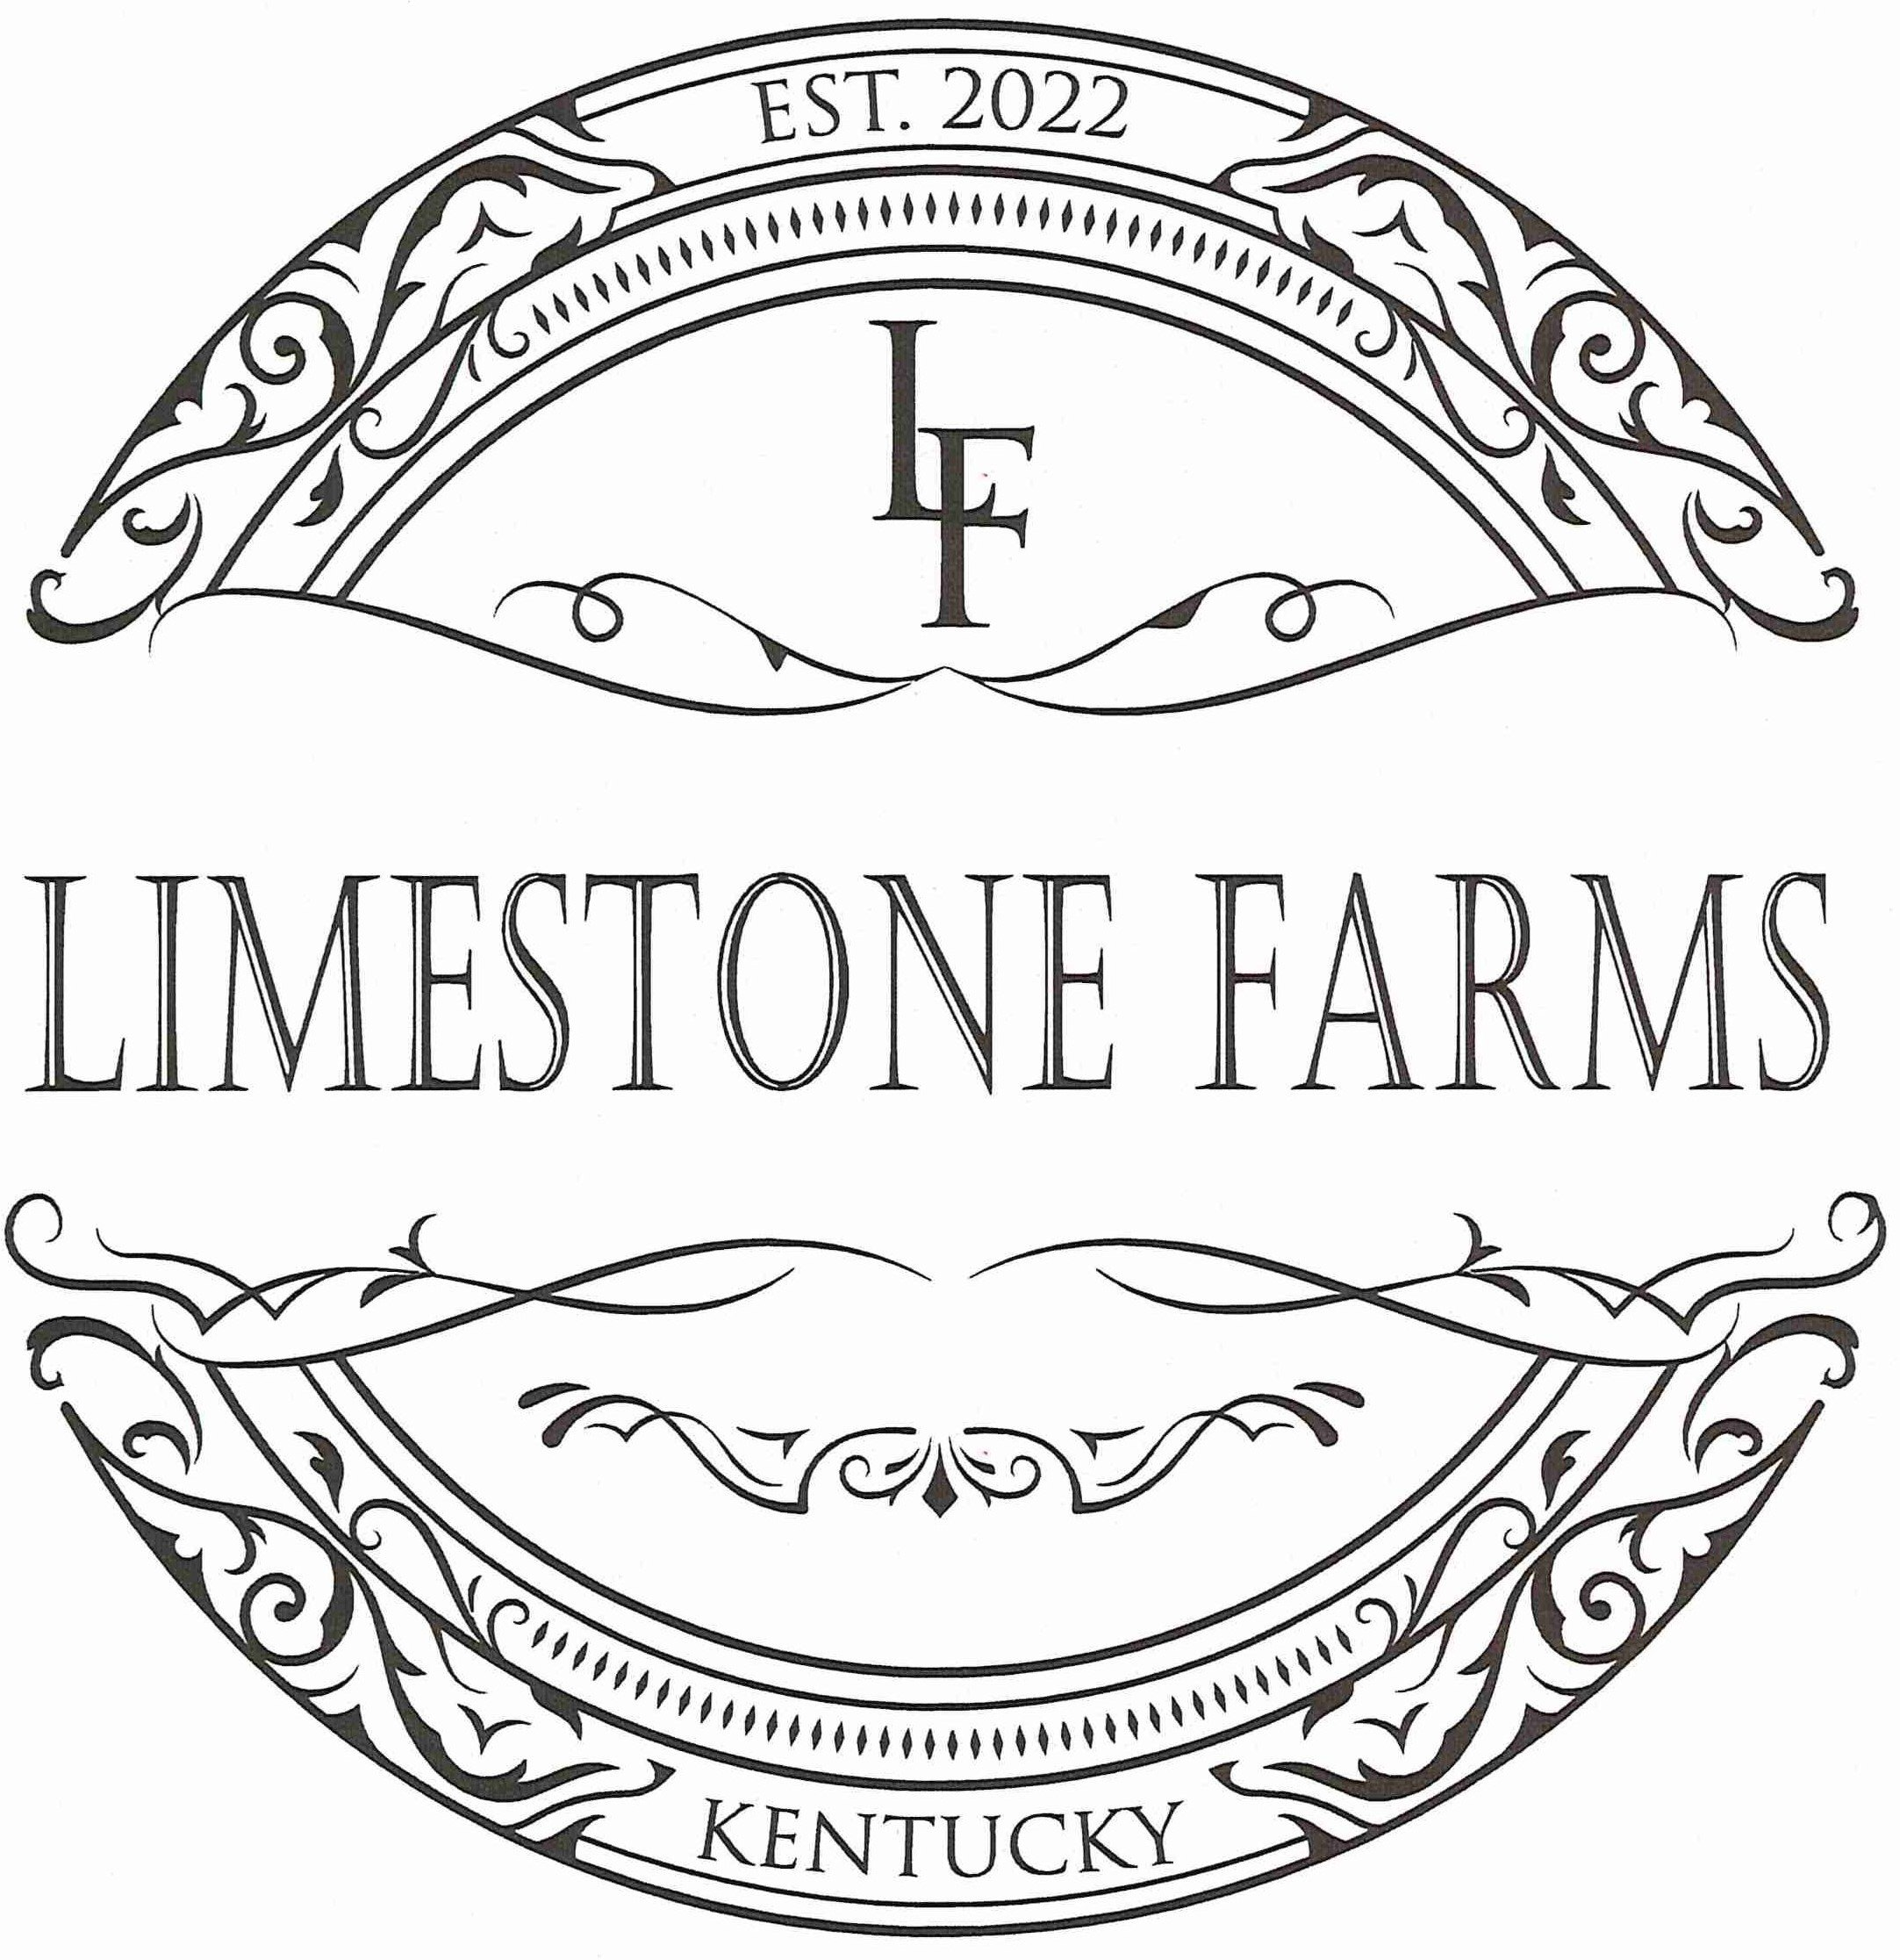  EST. 2022 LF LIMESTONE FARMS KENTUCKY